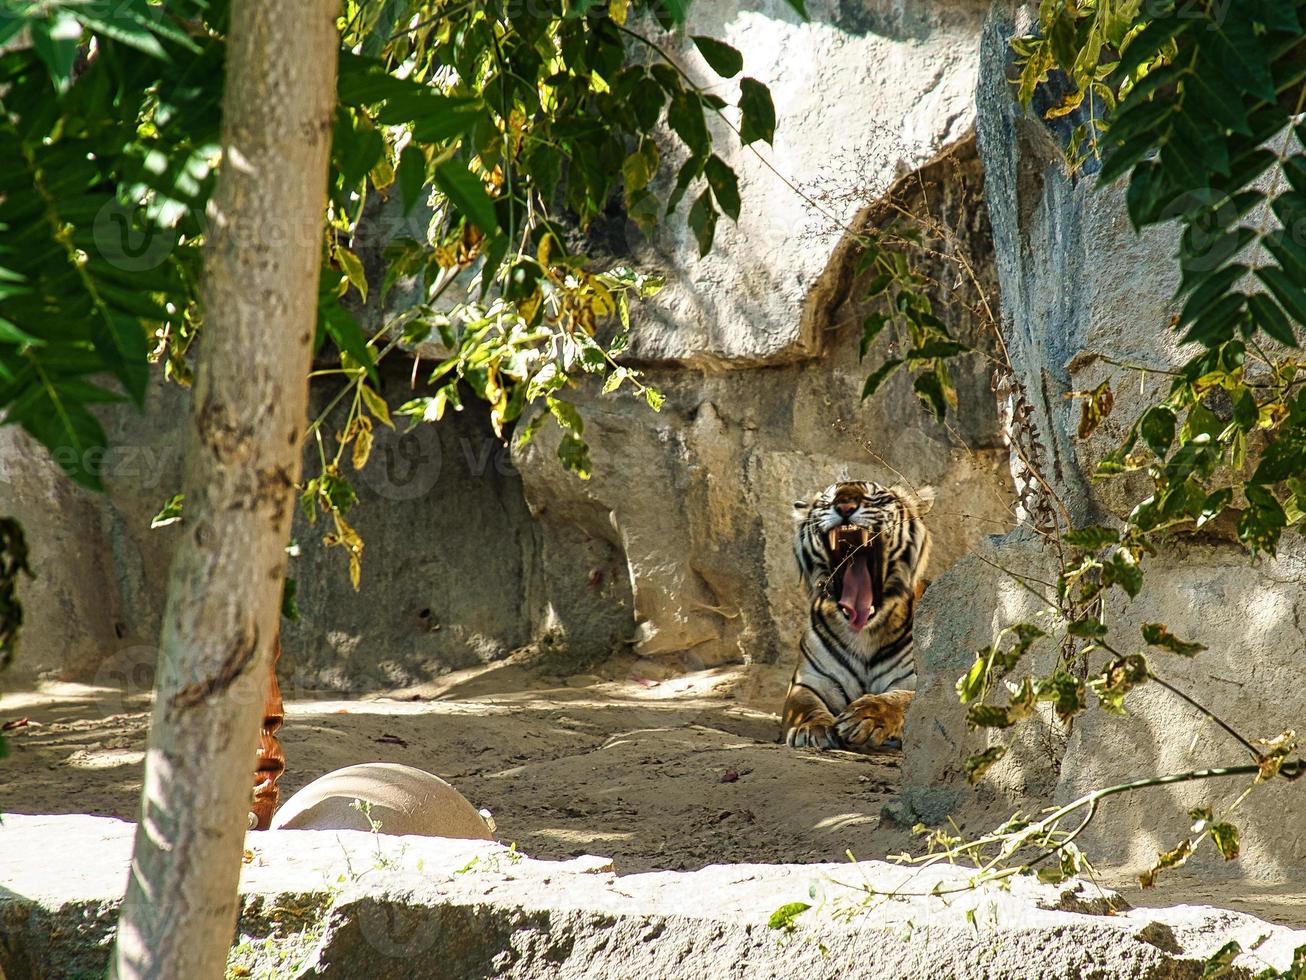 Tiger between trees and rock. Striped coat of elegant predators. Big cat from Asia photo